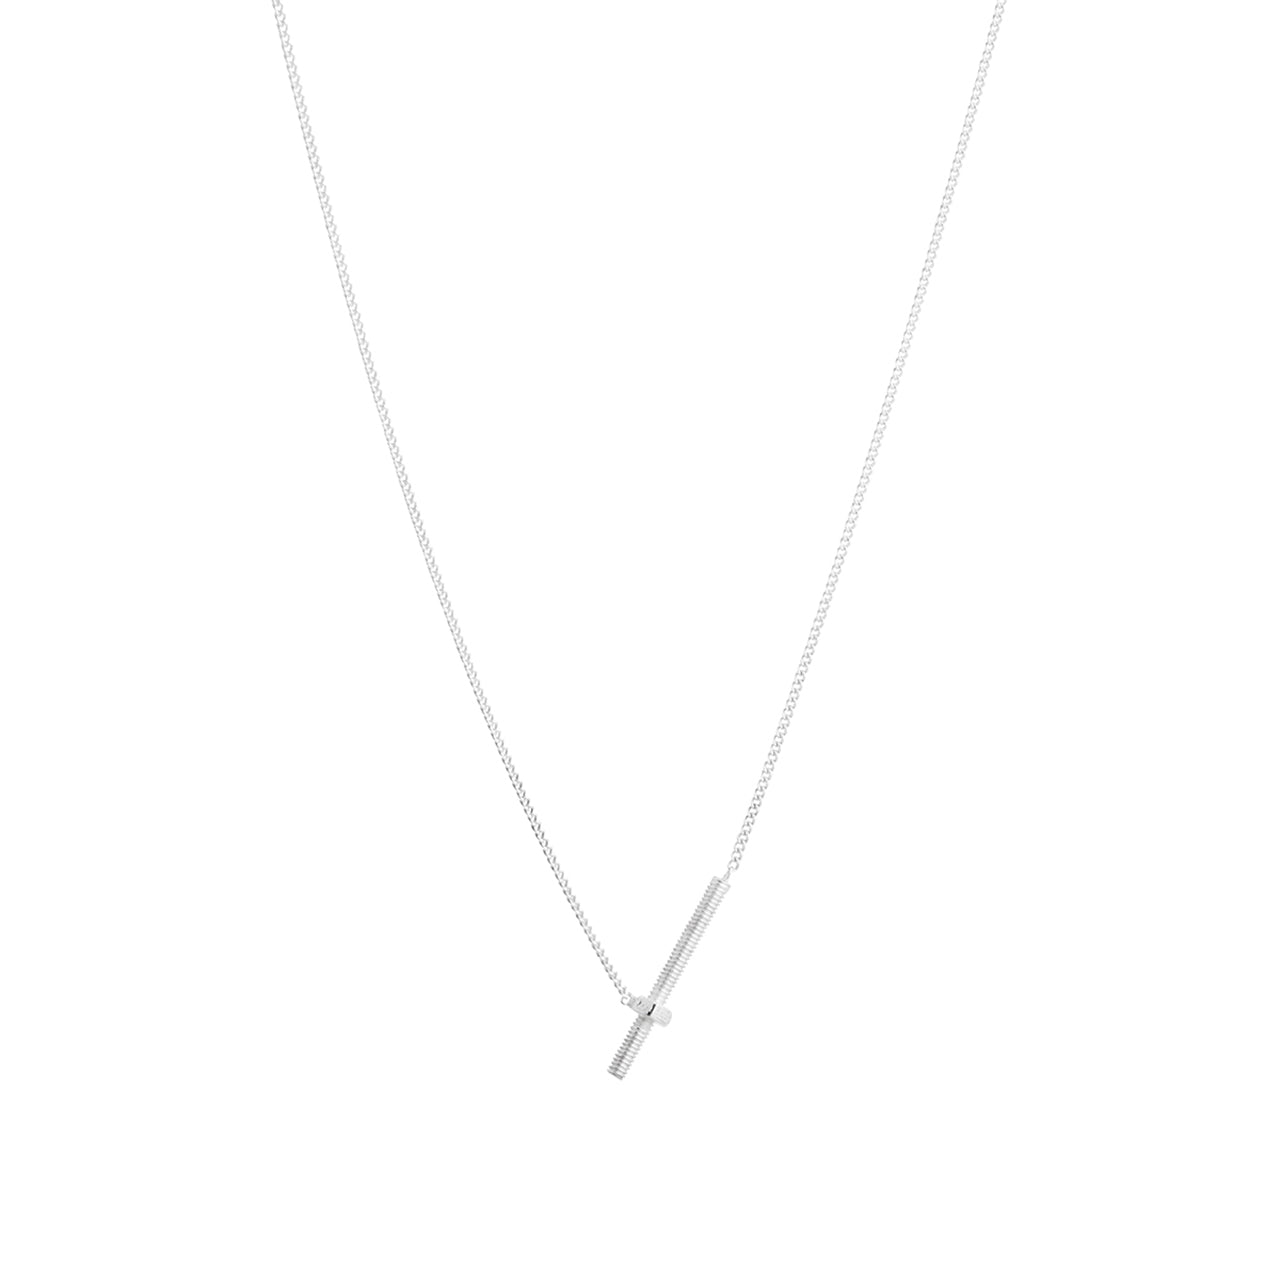 silver screw thread necklace